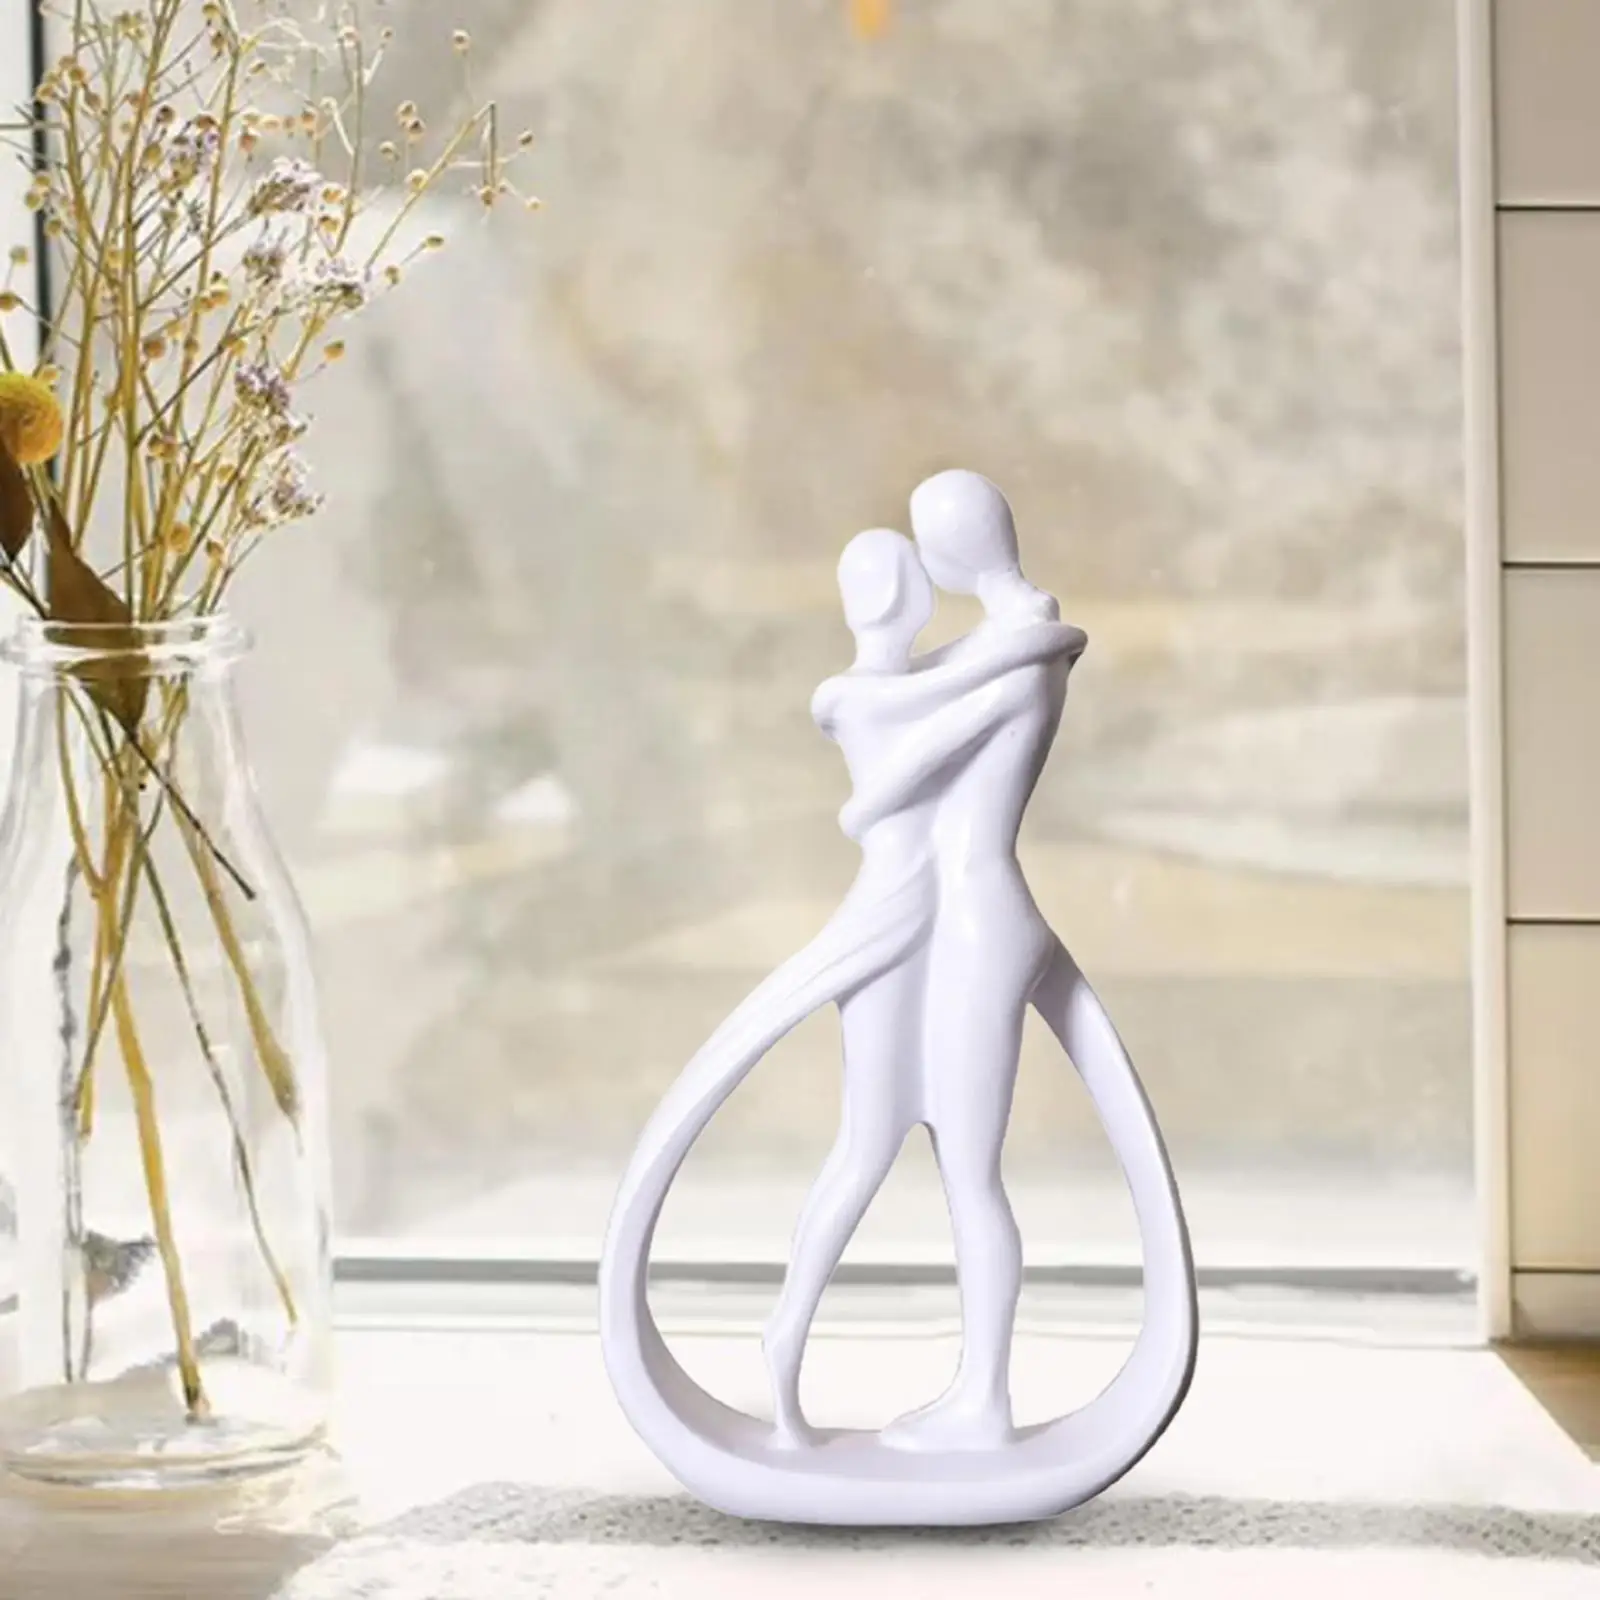 Couple Statue Romantic Modern Desktop Ornament for Office Desk Home Decor